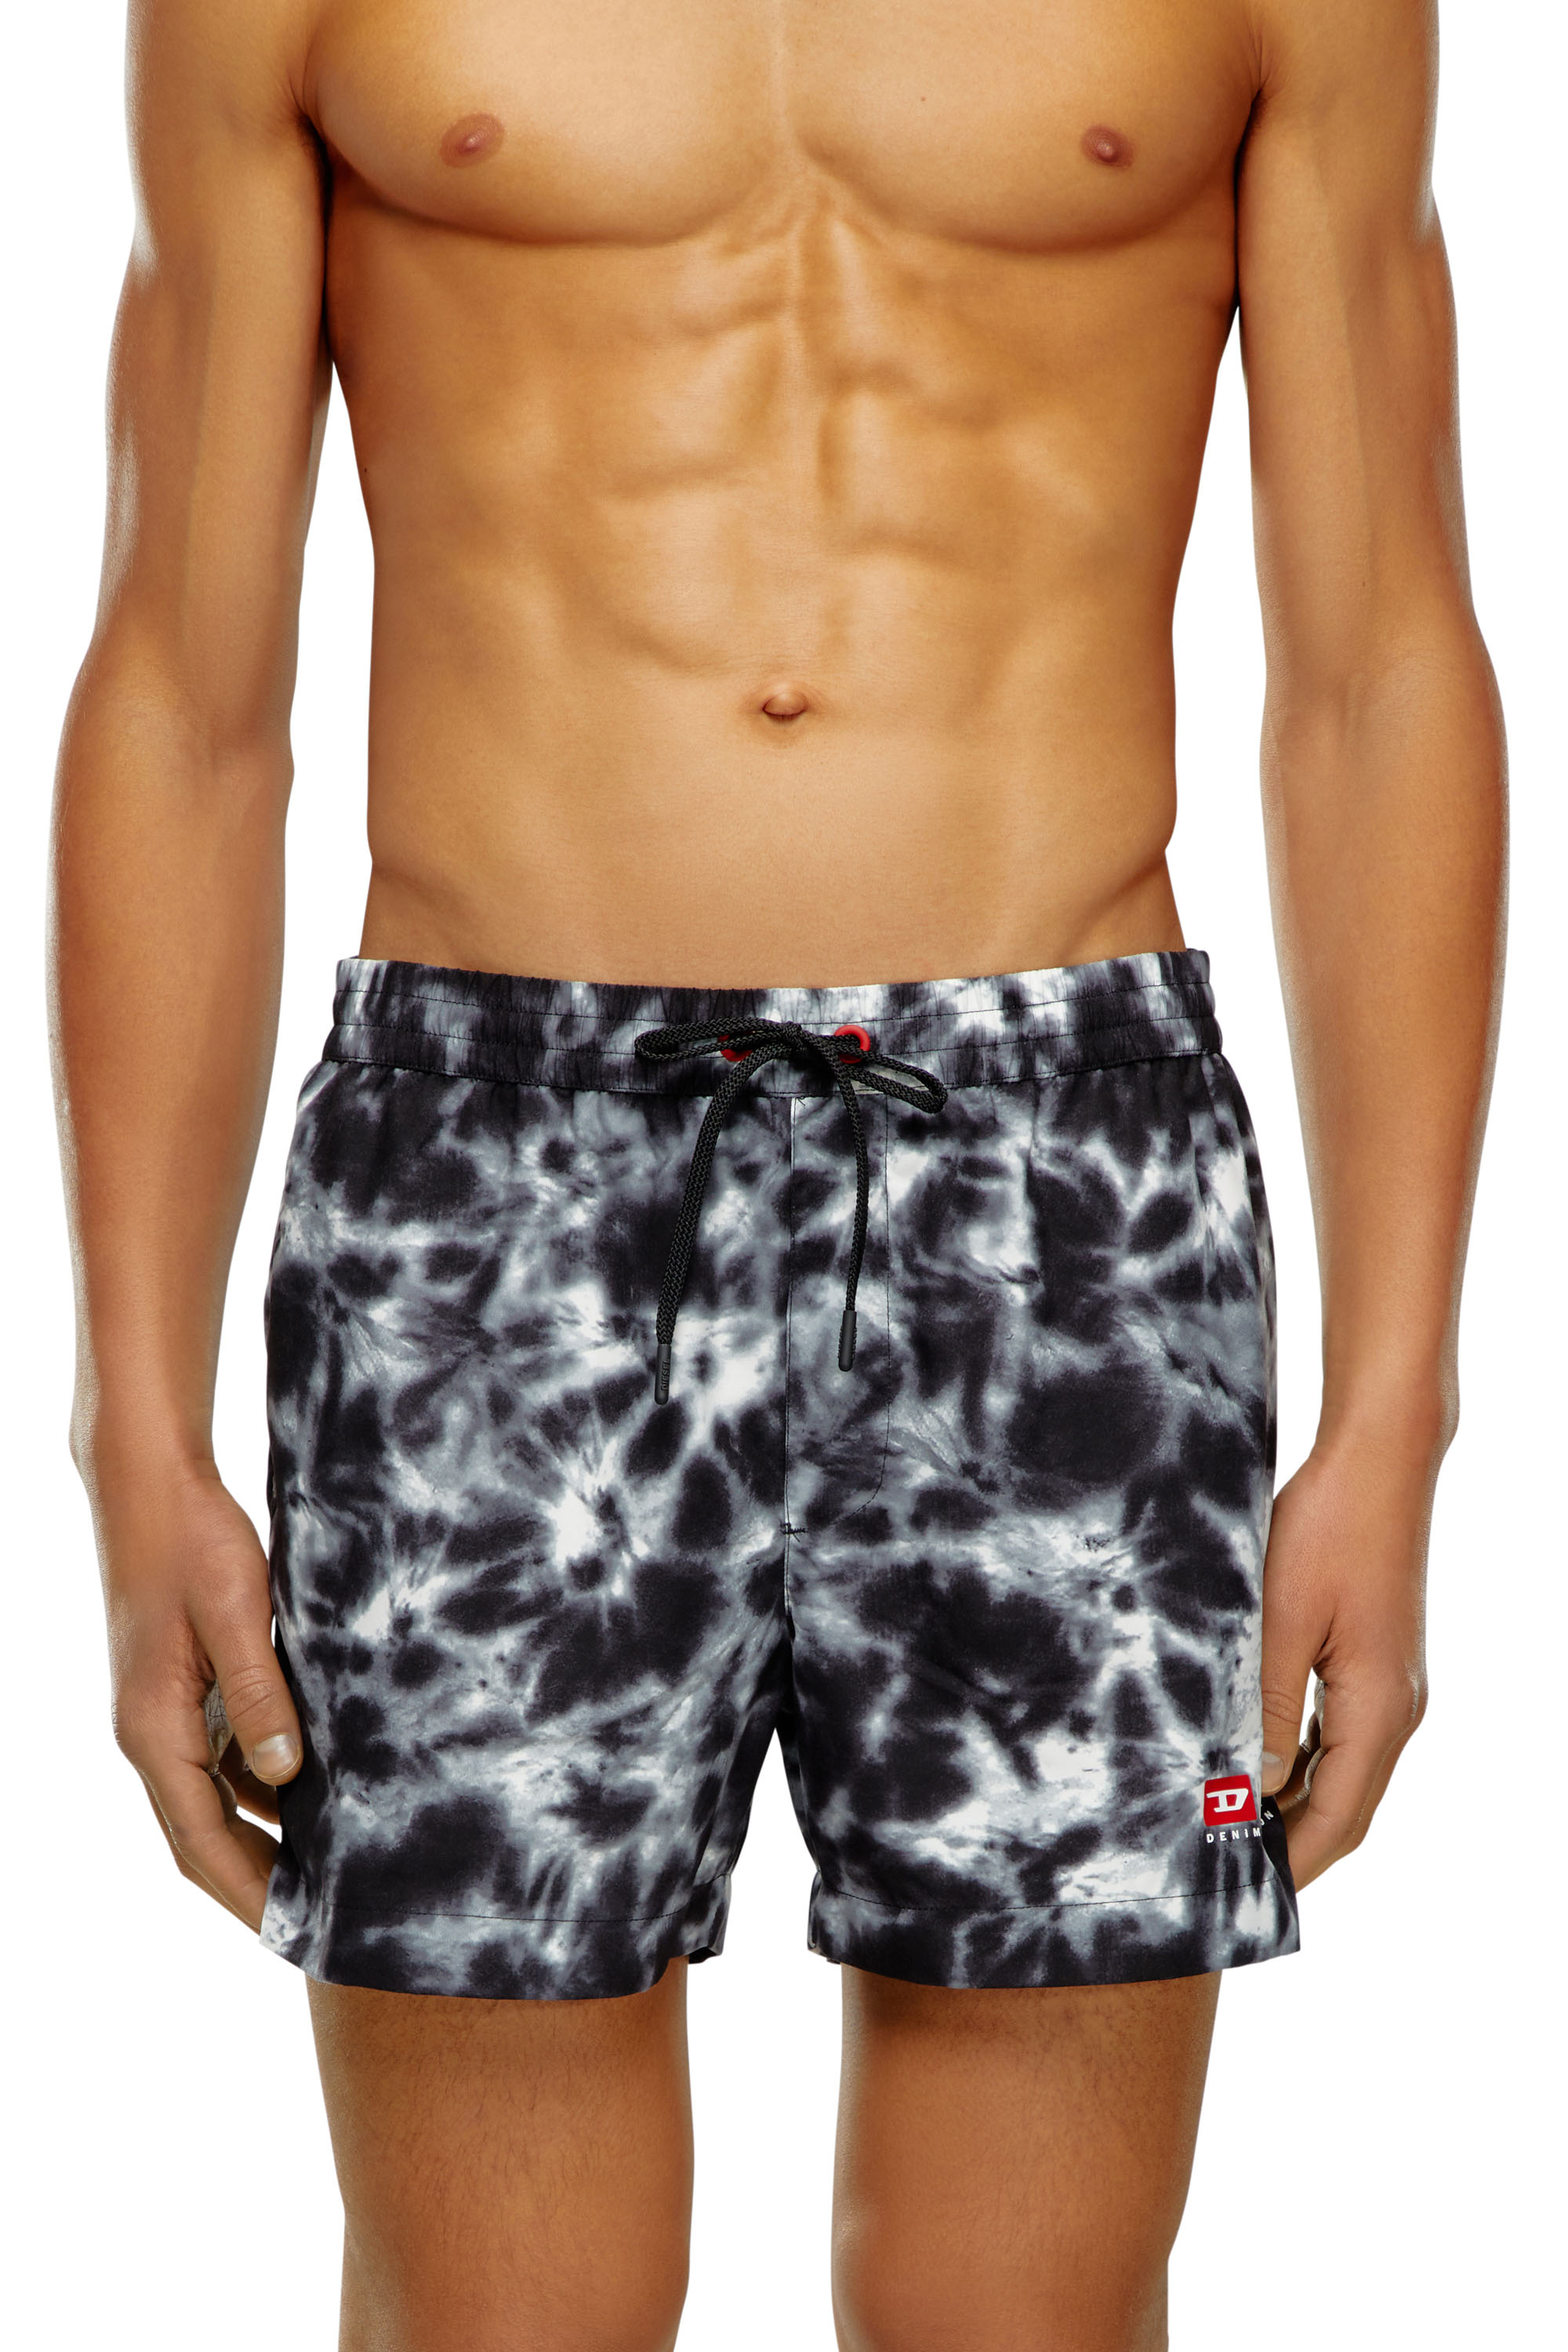 Men's Mid-length swim shorts with tie-dye print | Black | Diesel